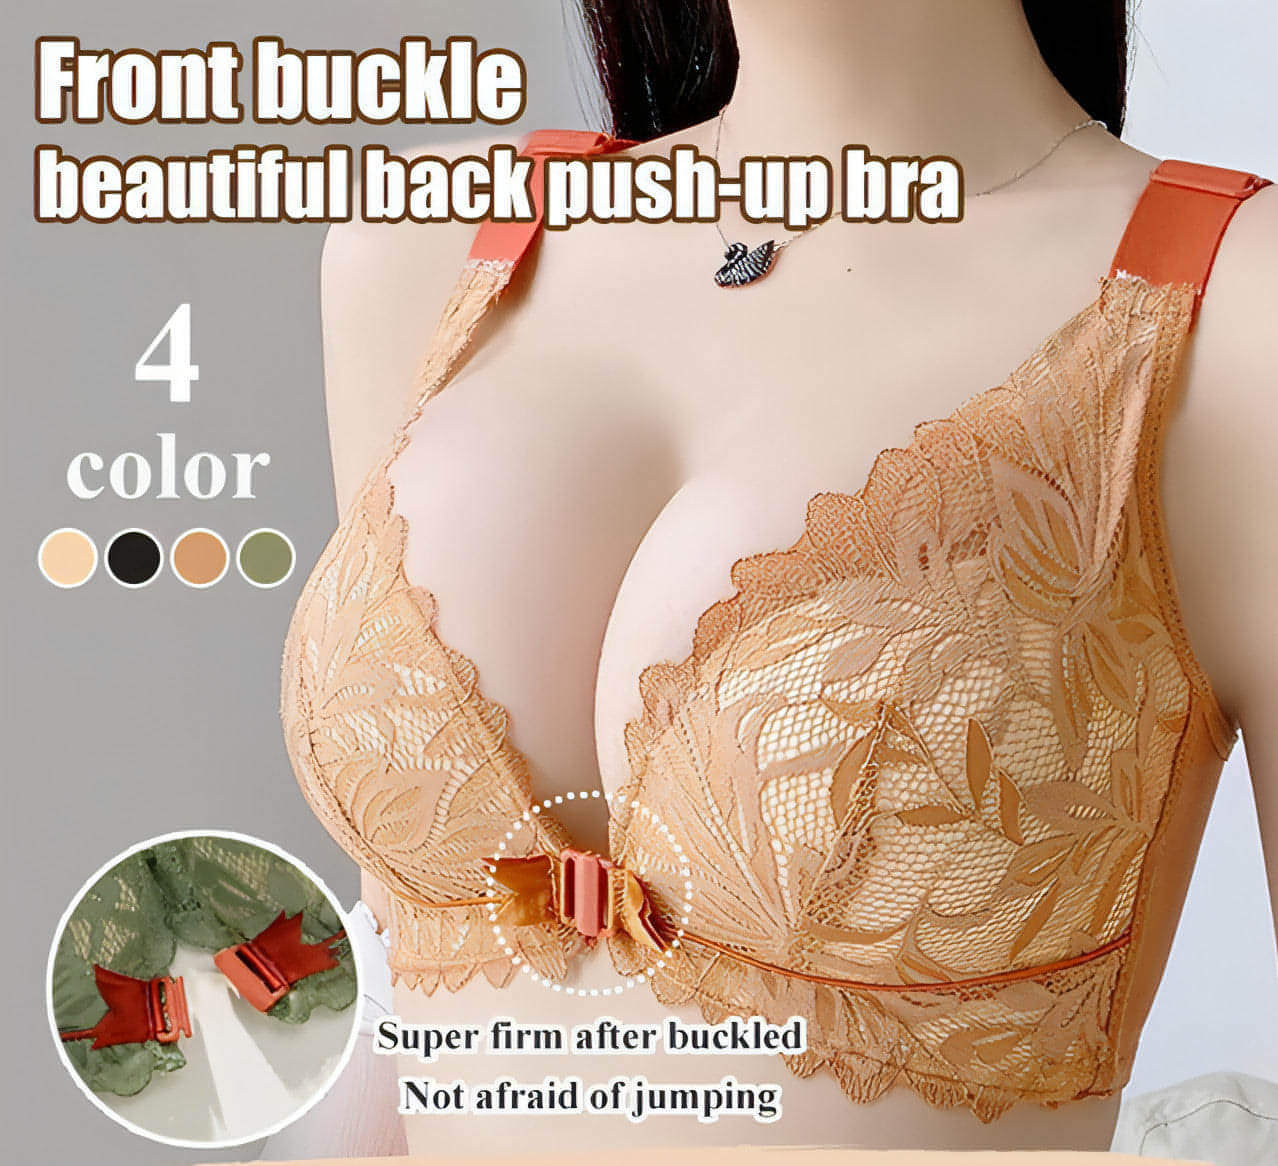 Front buckle beautiful back push-up bra – SHOP INDIAN CART